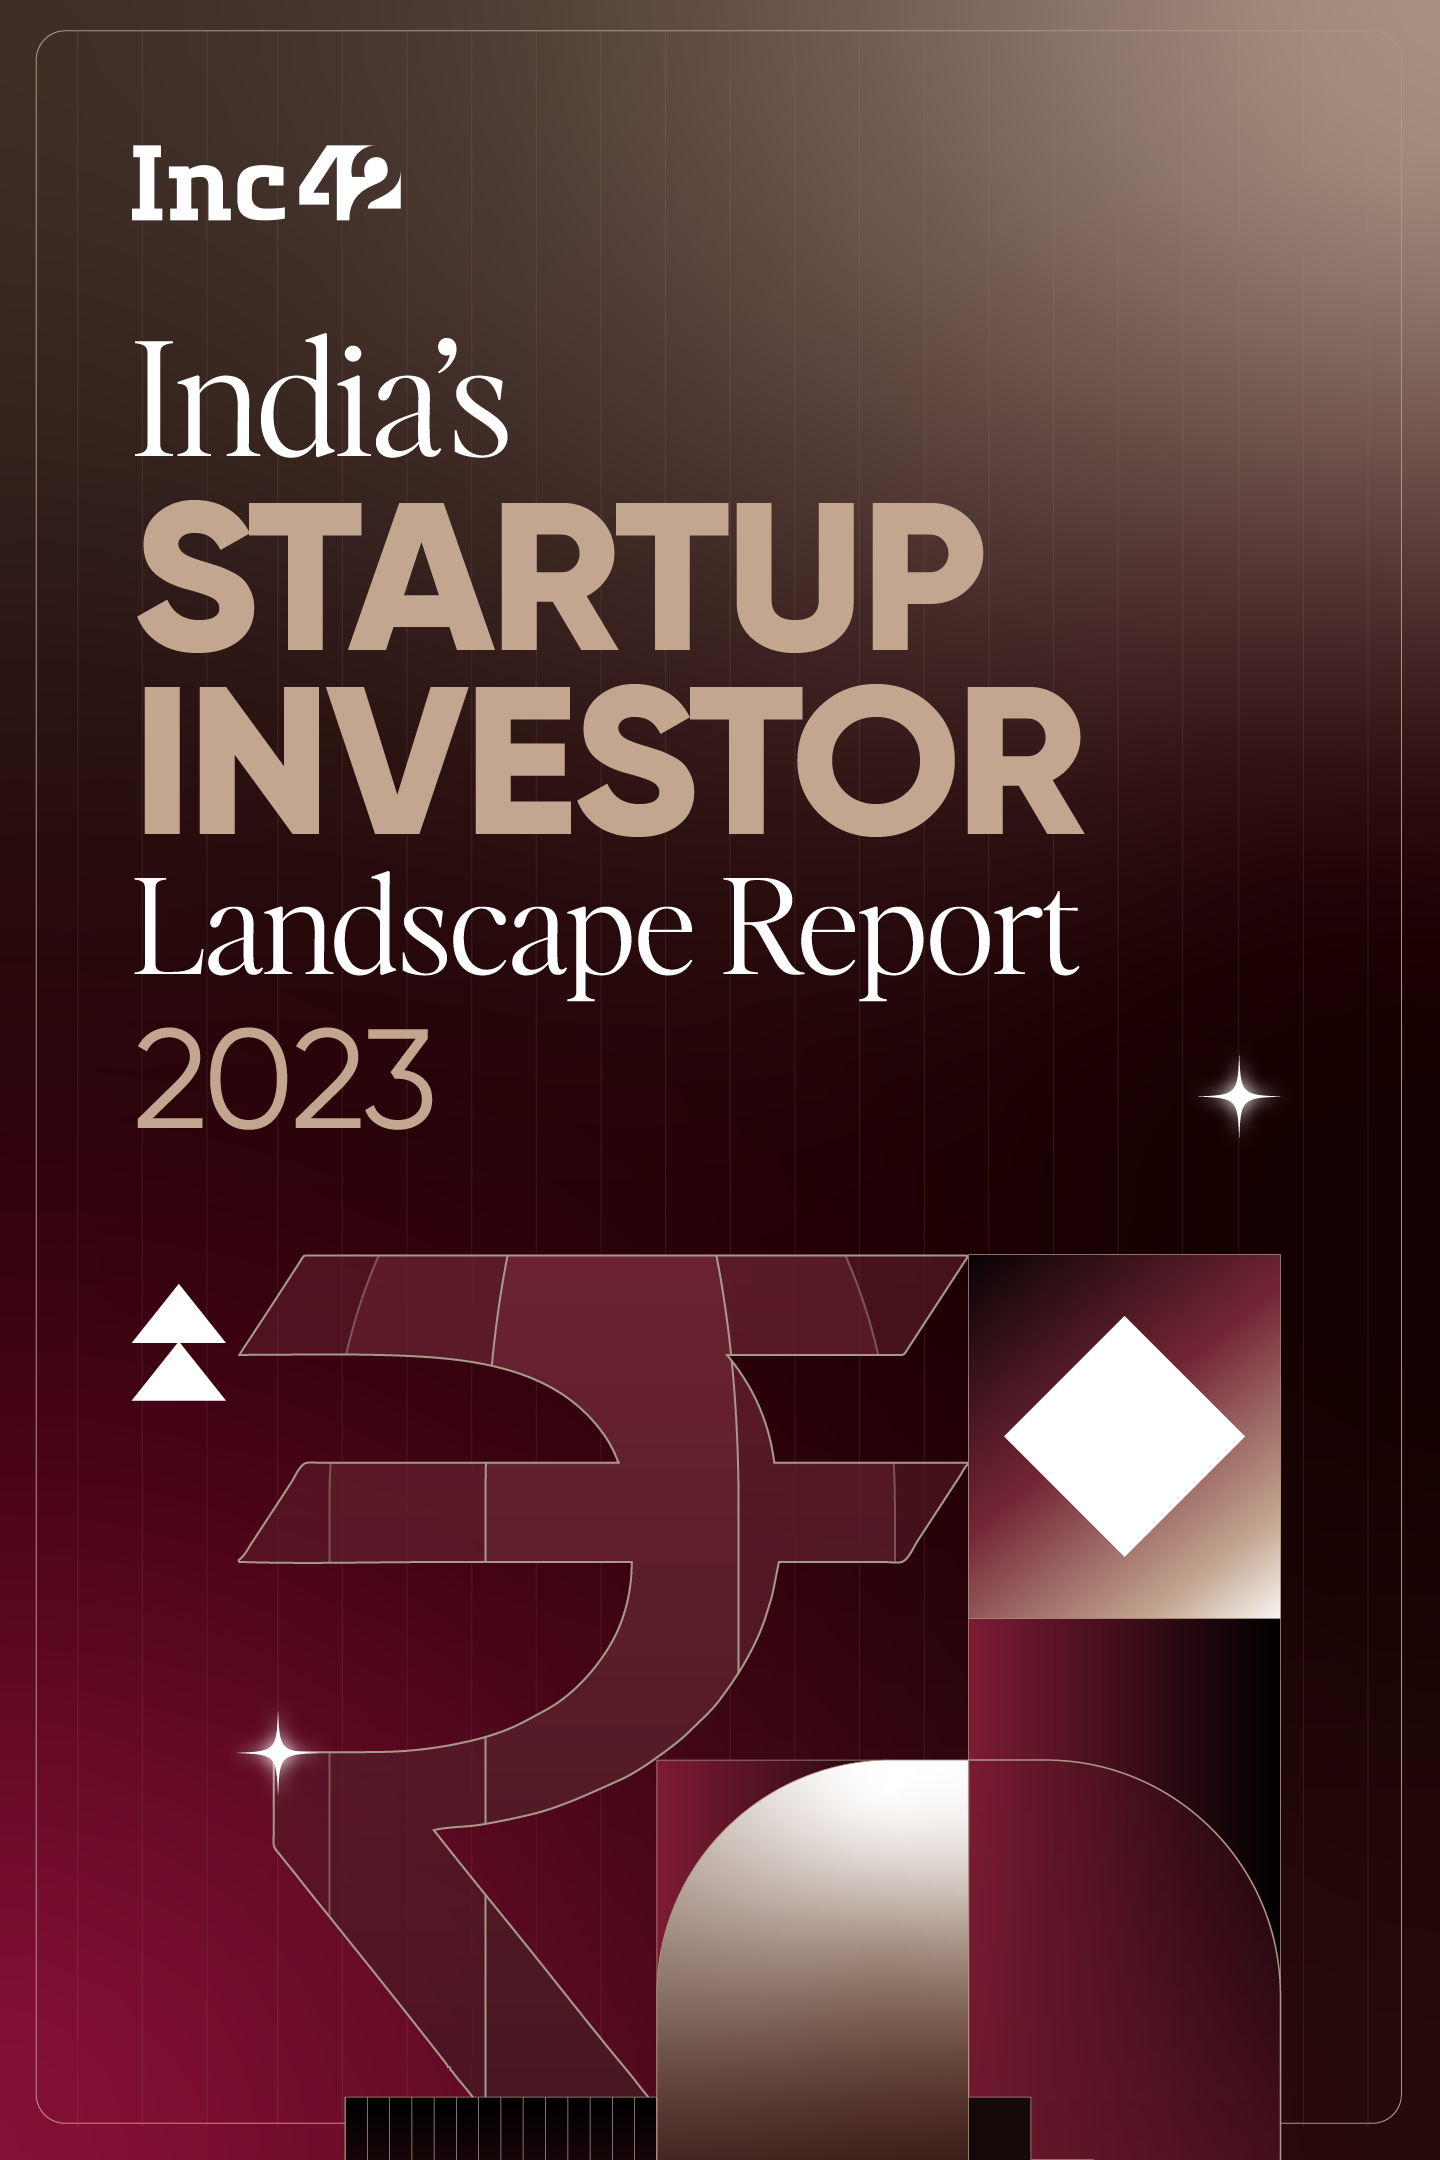 India’s Startup Investor Landscape Report 2023